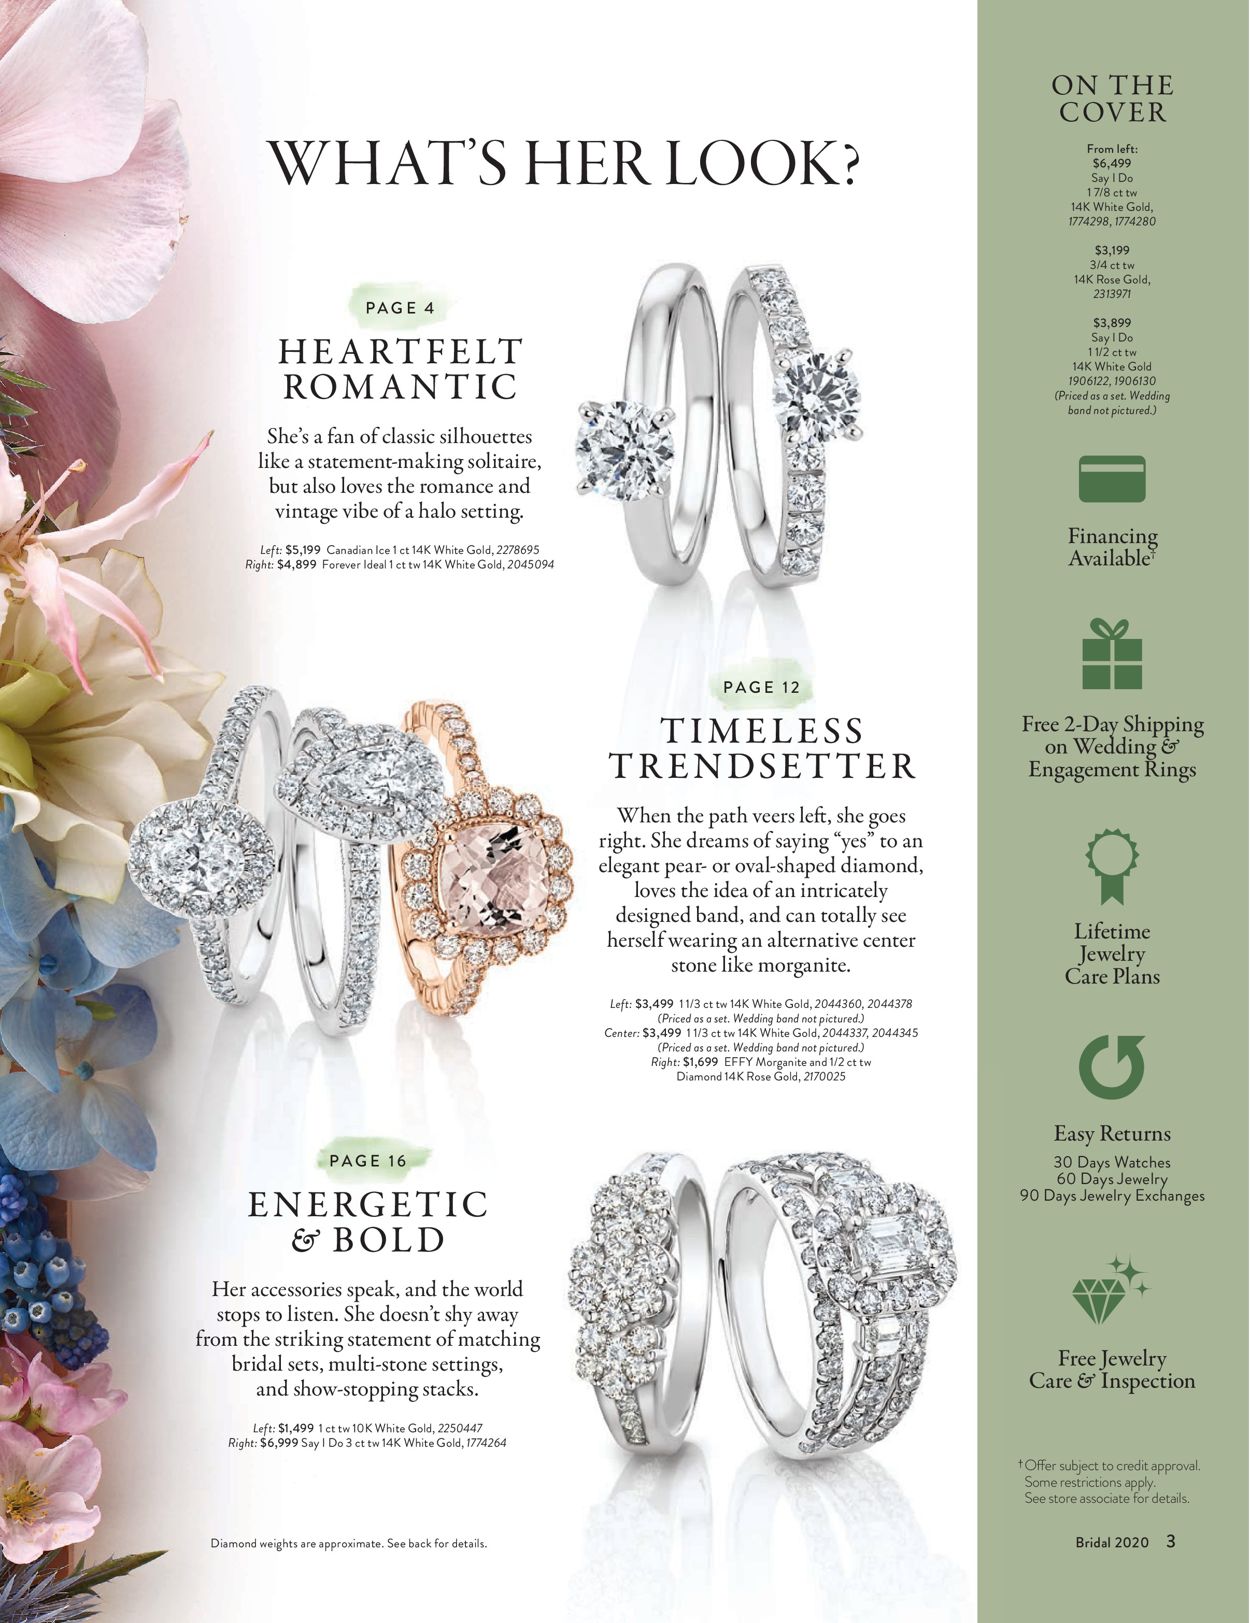 Littman Jewelers Ad from 06/24/2020